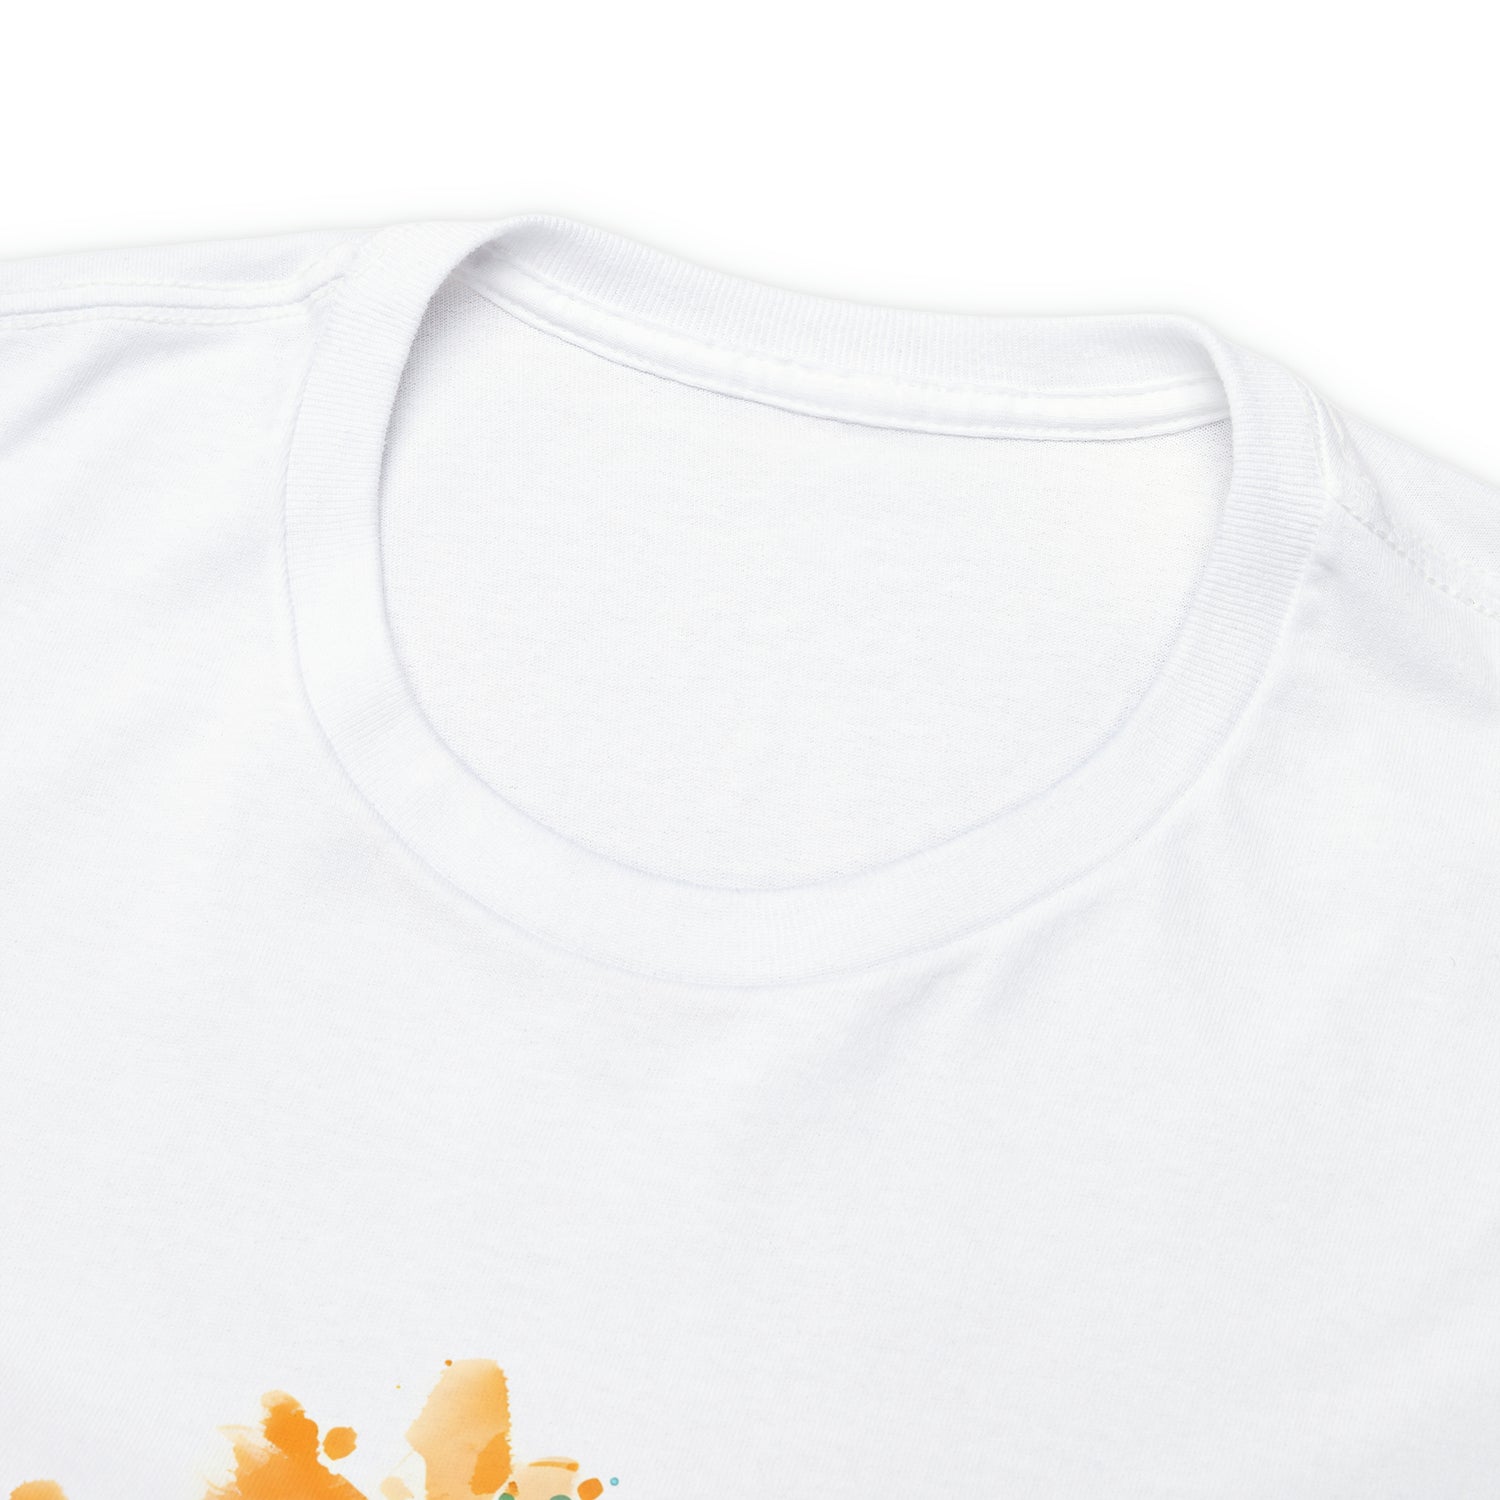 Watercolor Texas Longhorn T-shirt, Unisex Heavy Cotton Tee - CosmicDeva